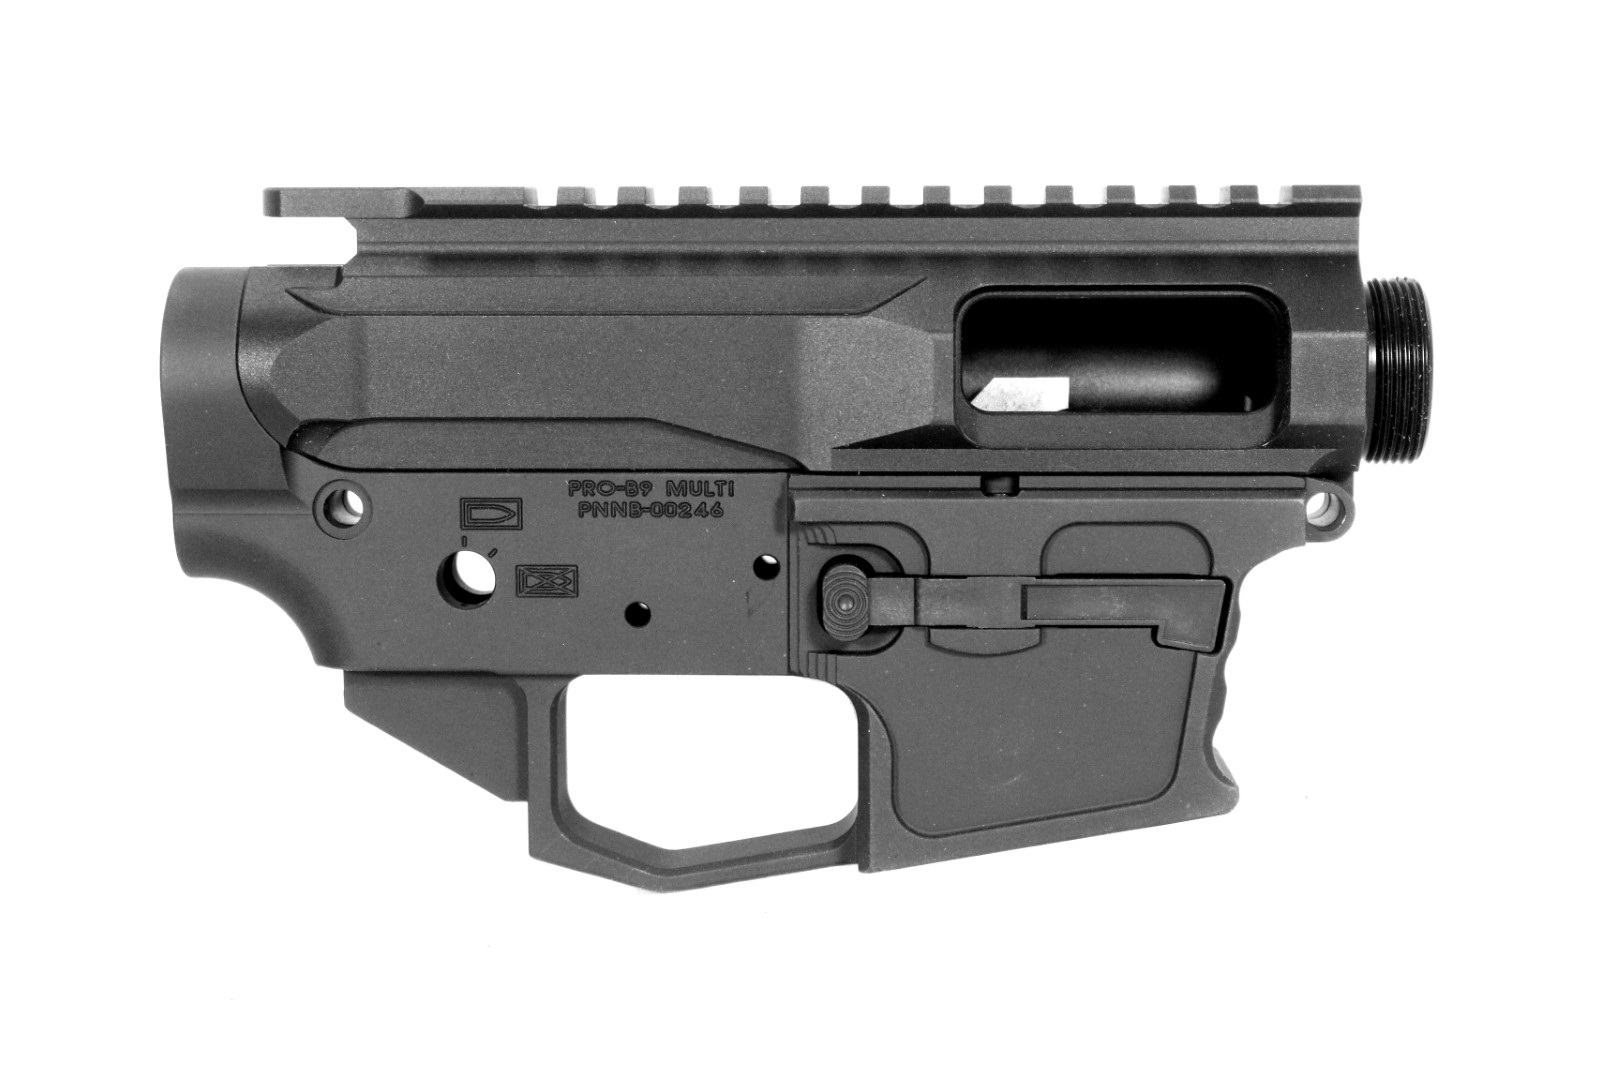 Pro2A AR-45 45 ACP/10mm Stripped Billet Upper / Lower Receiver Set - Black